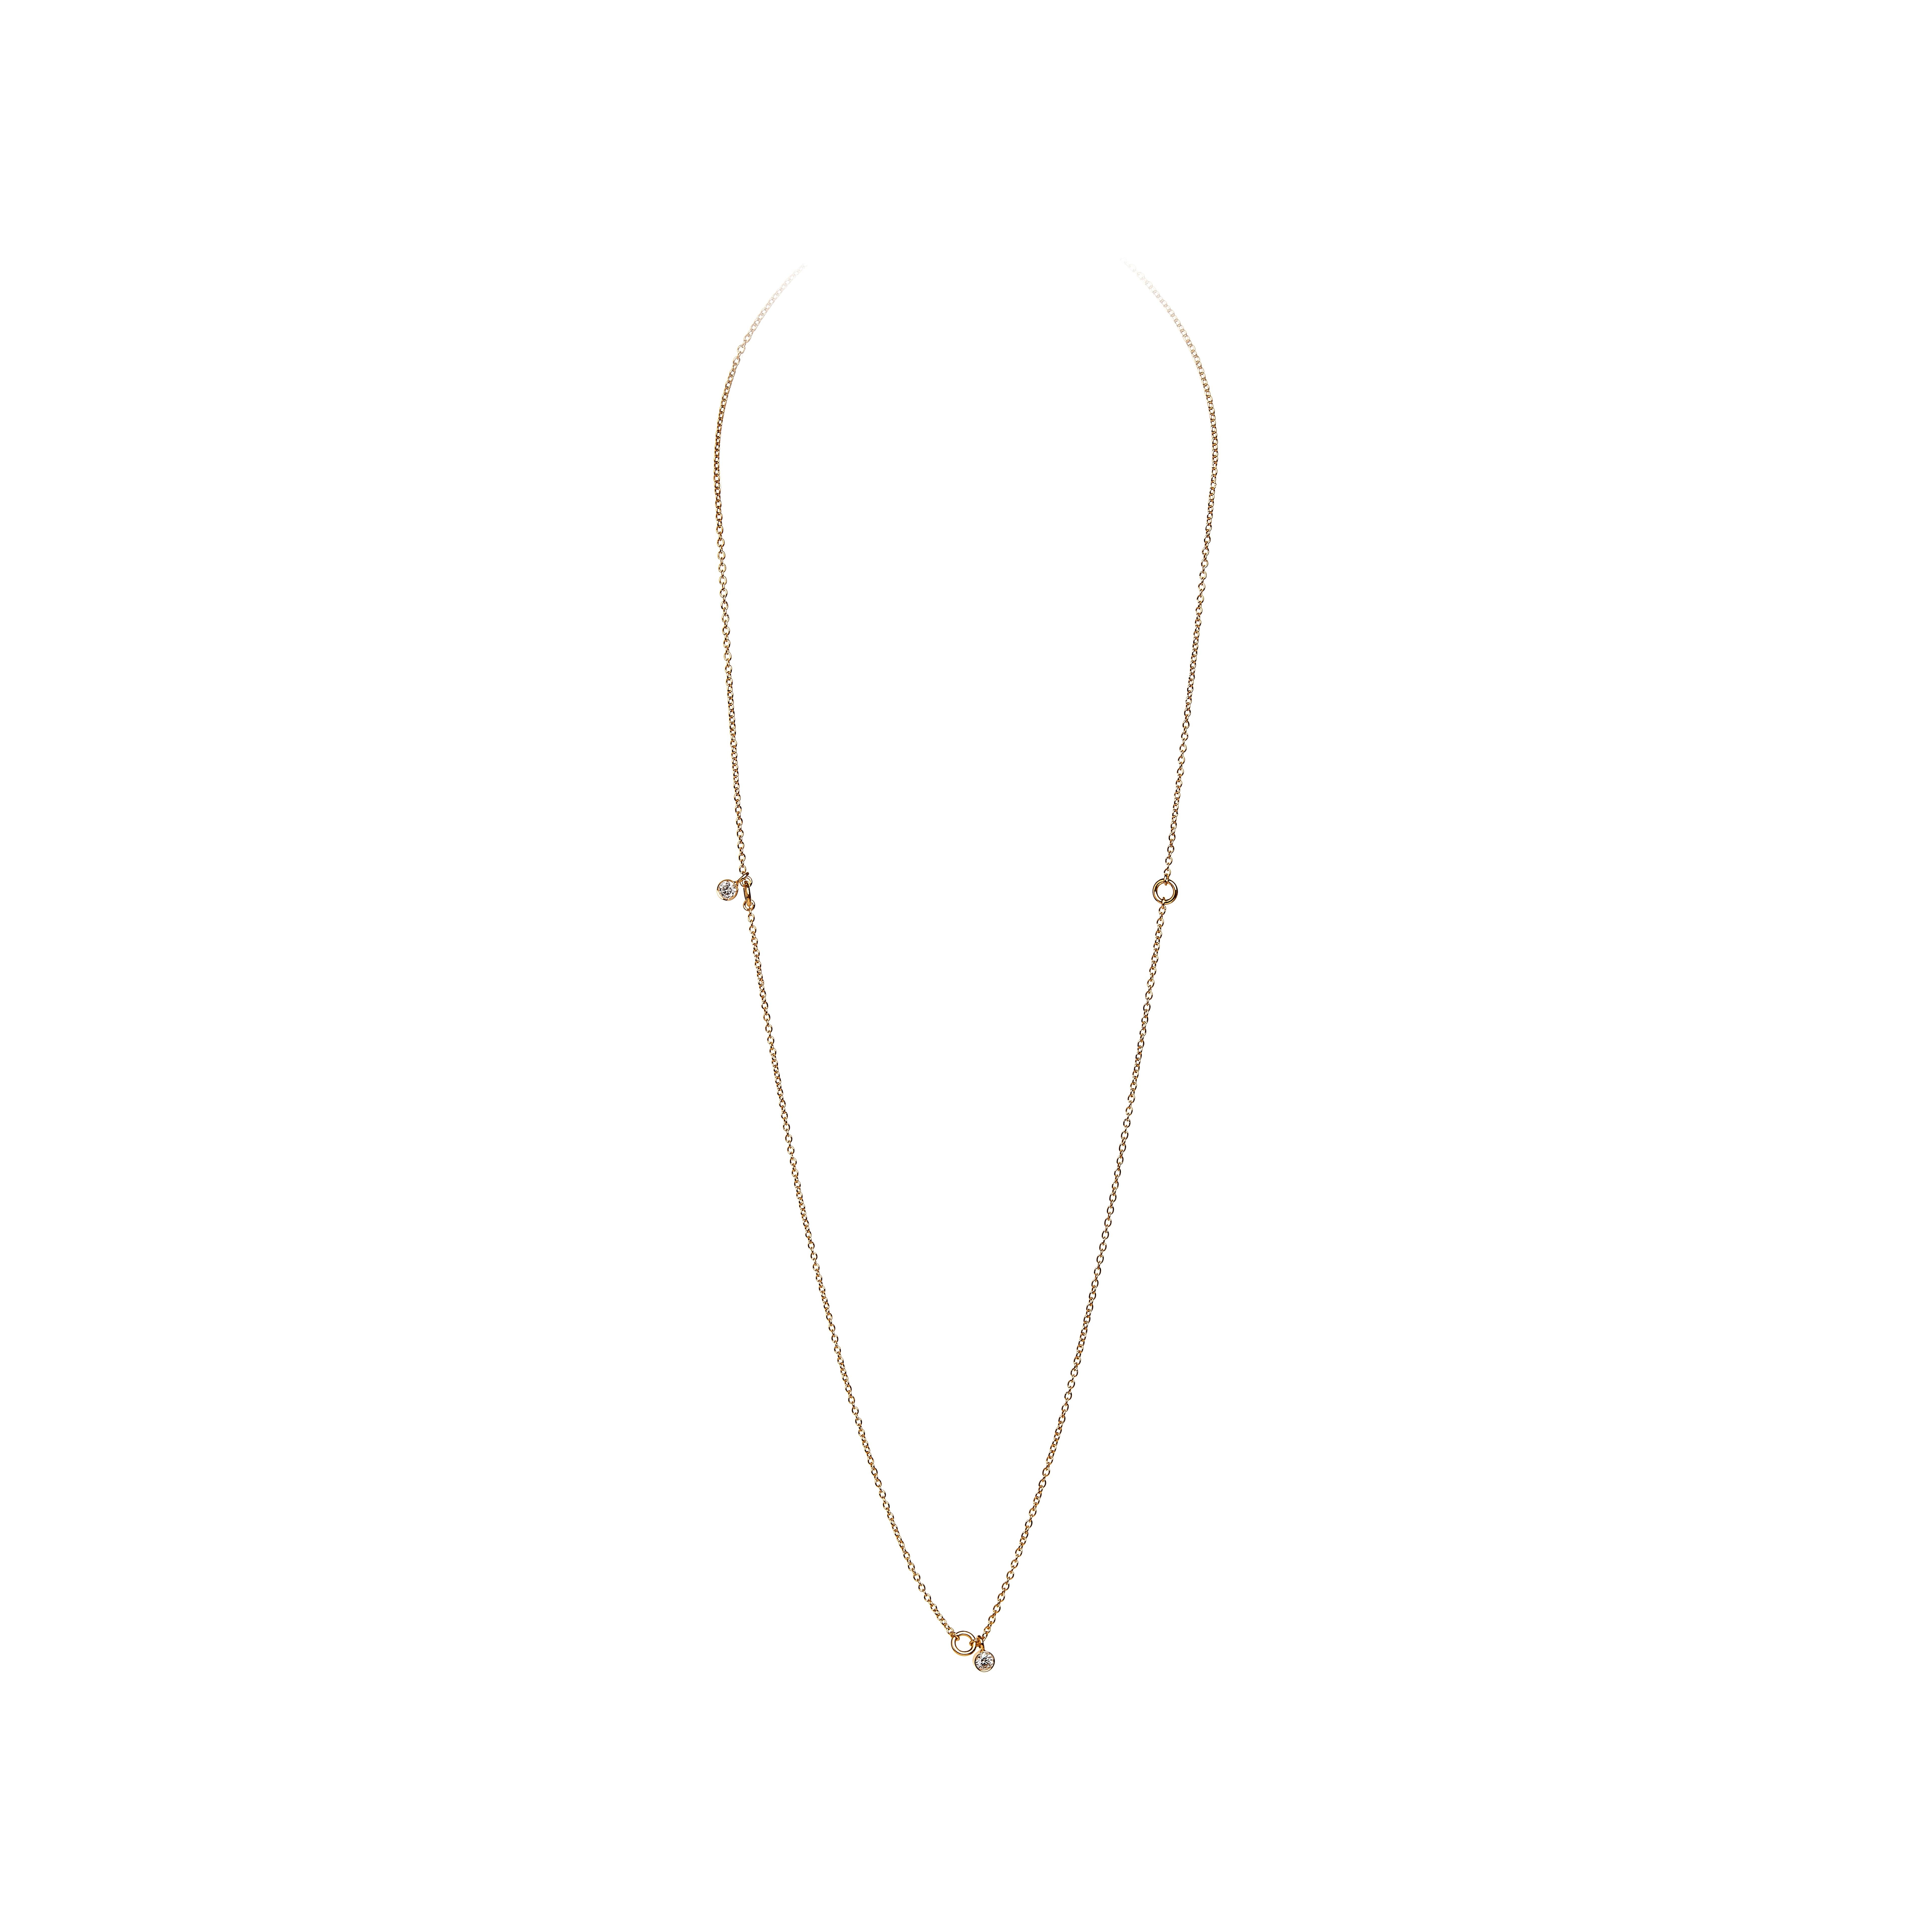 Nathalie Jean Contemporary 0.33 Carat Diamond Gold Pendant Chain Necklace For Sale 3